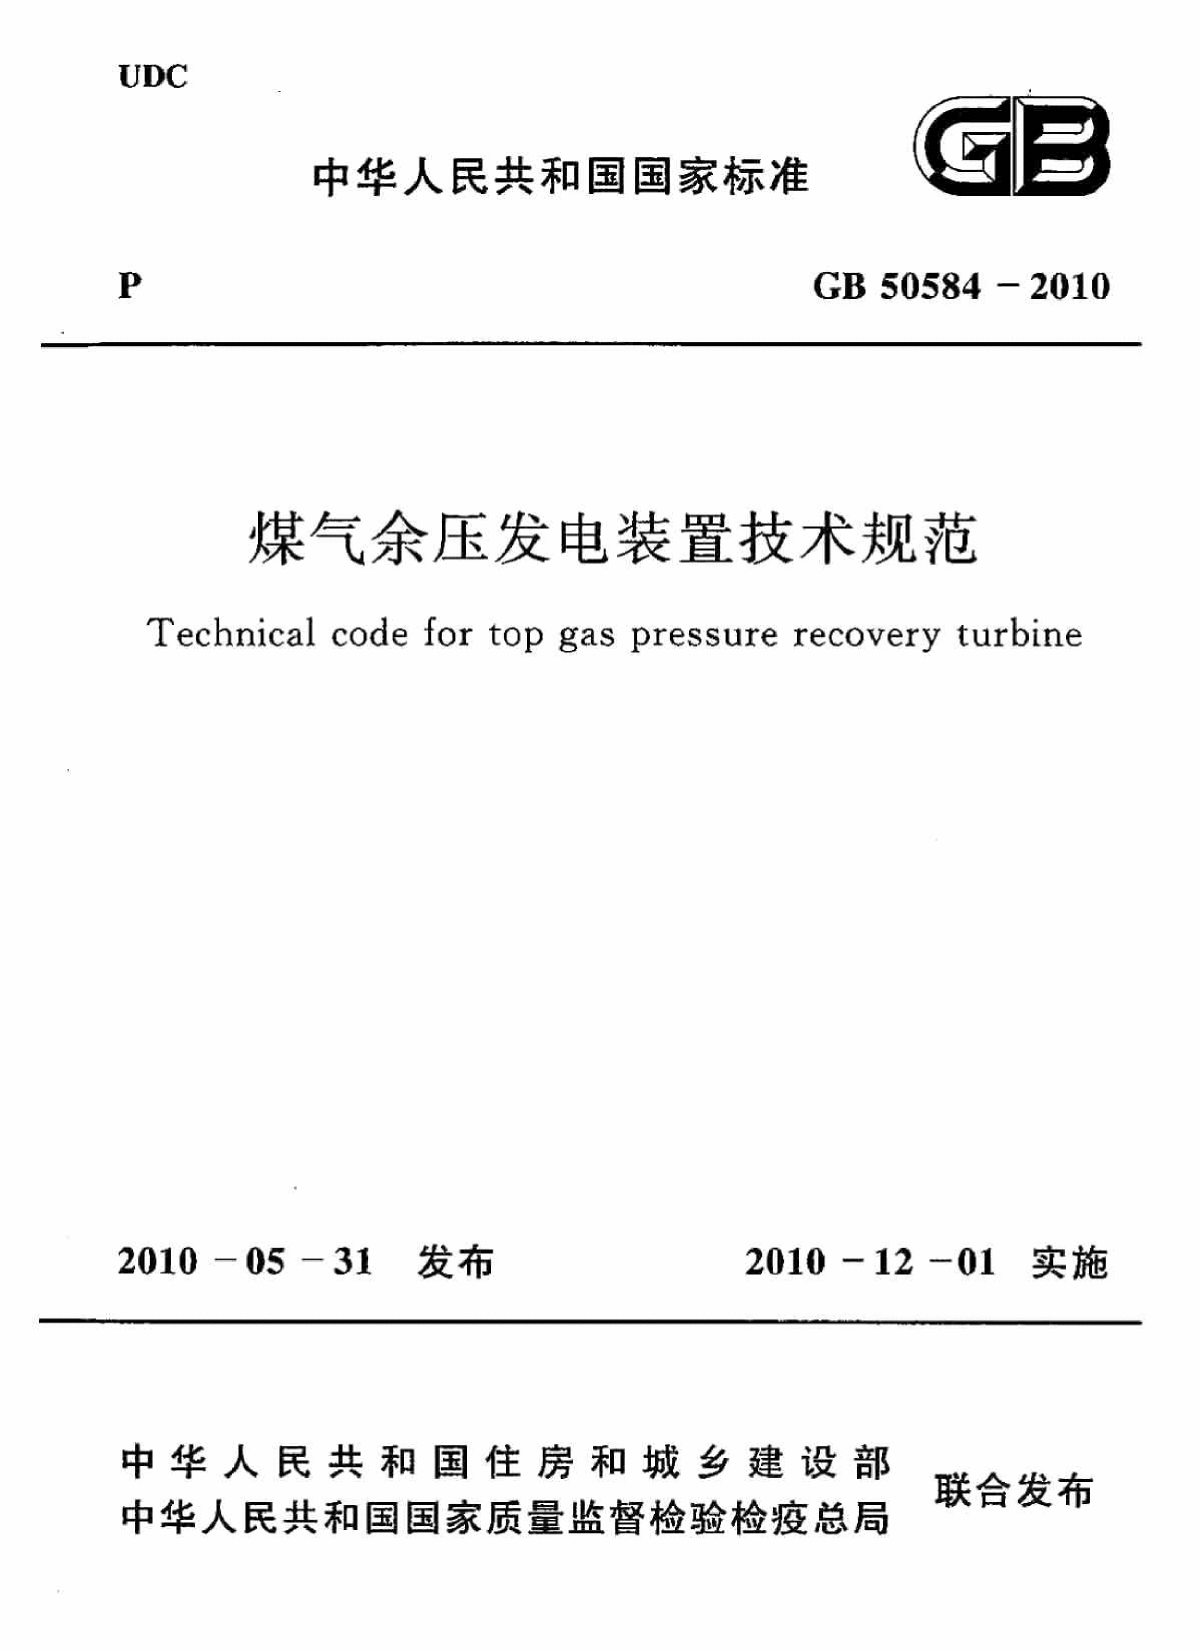 GB50584-2010 煤气余压发电装置技术规范